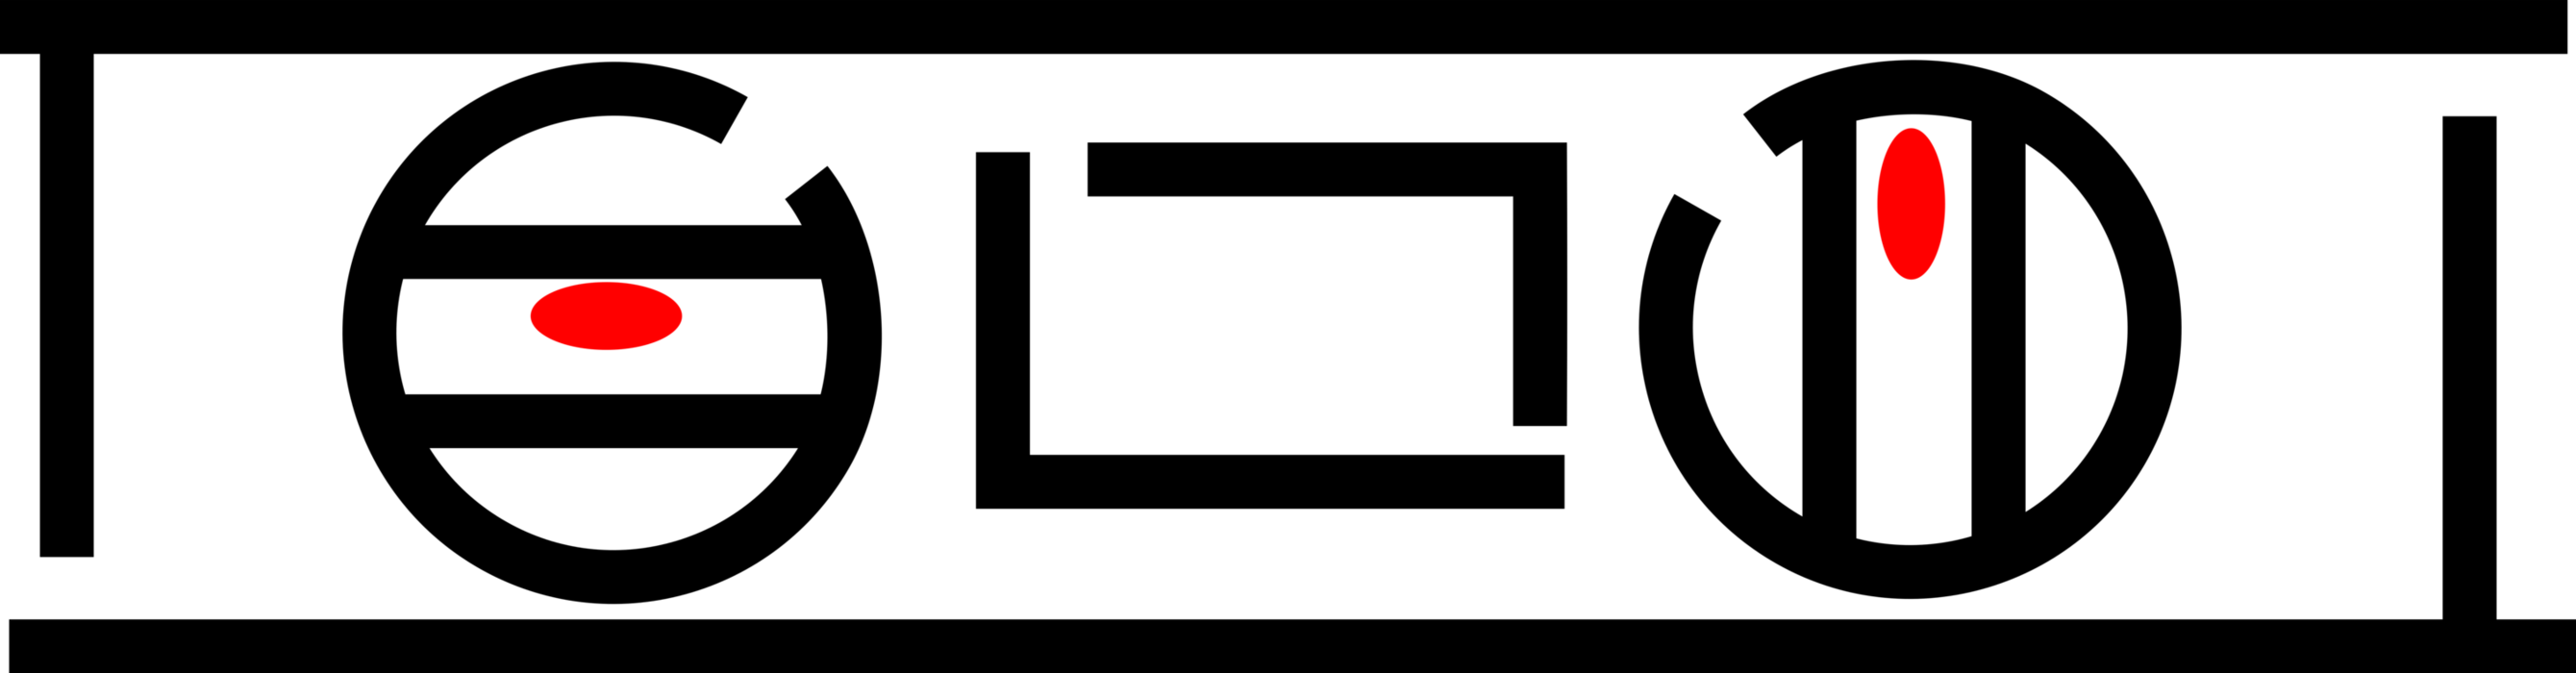 Vector Illustration of Carpenter's Spirit or Bubble Level Horizontal or Vertical Levelling Instrument